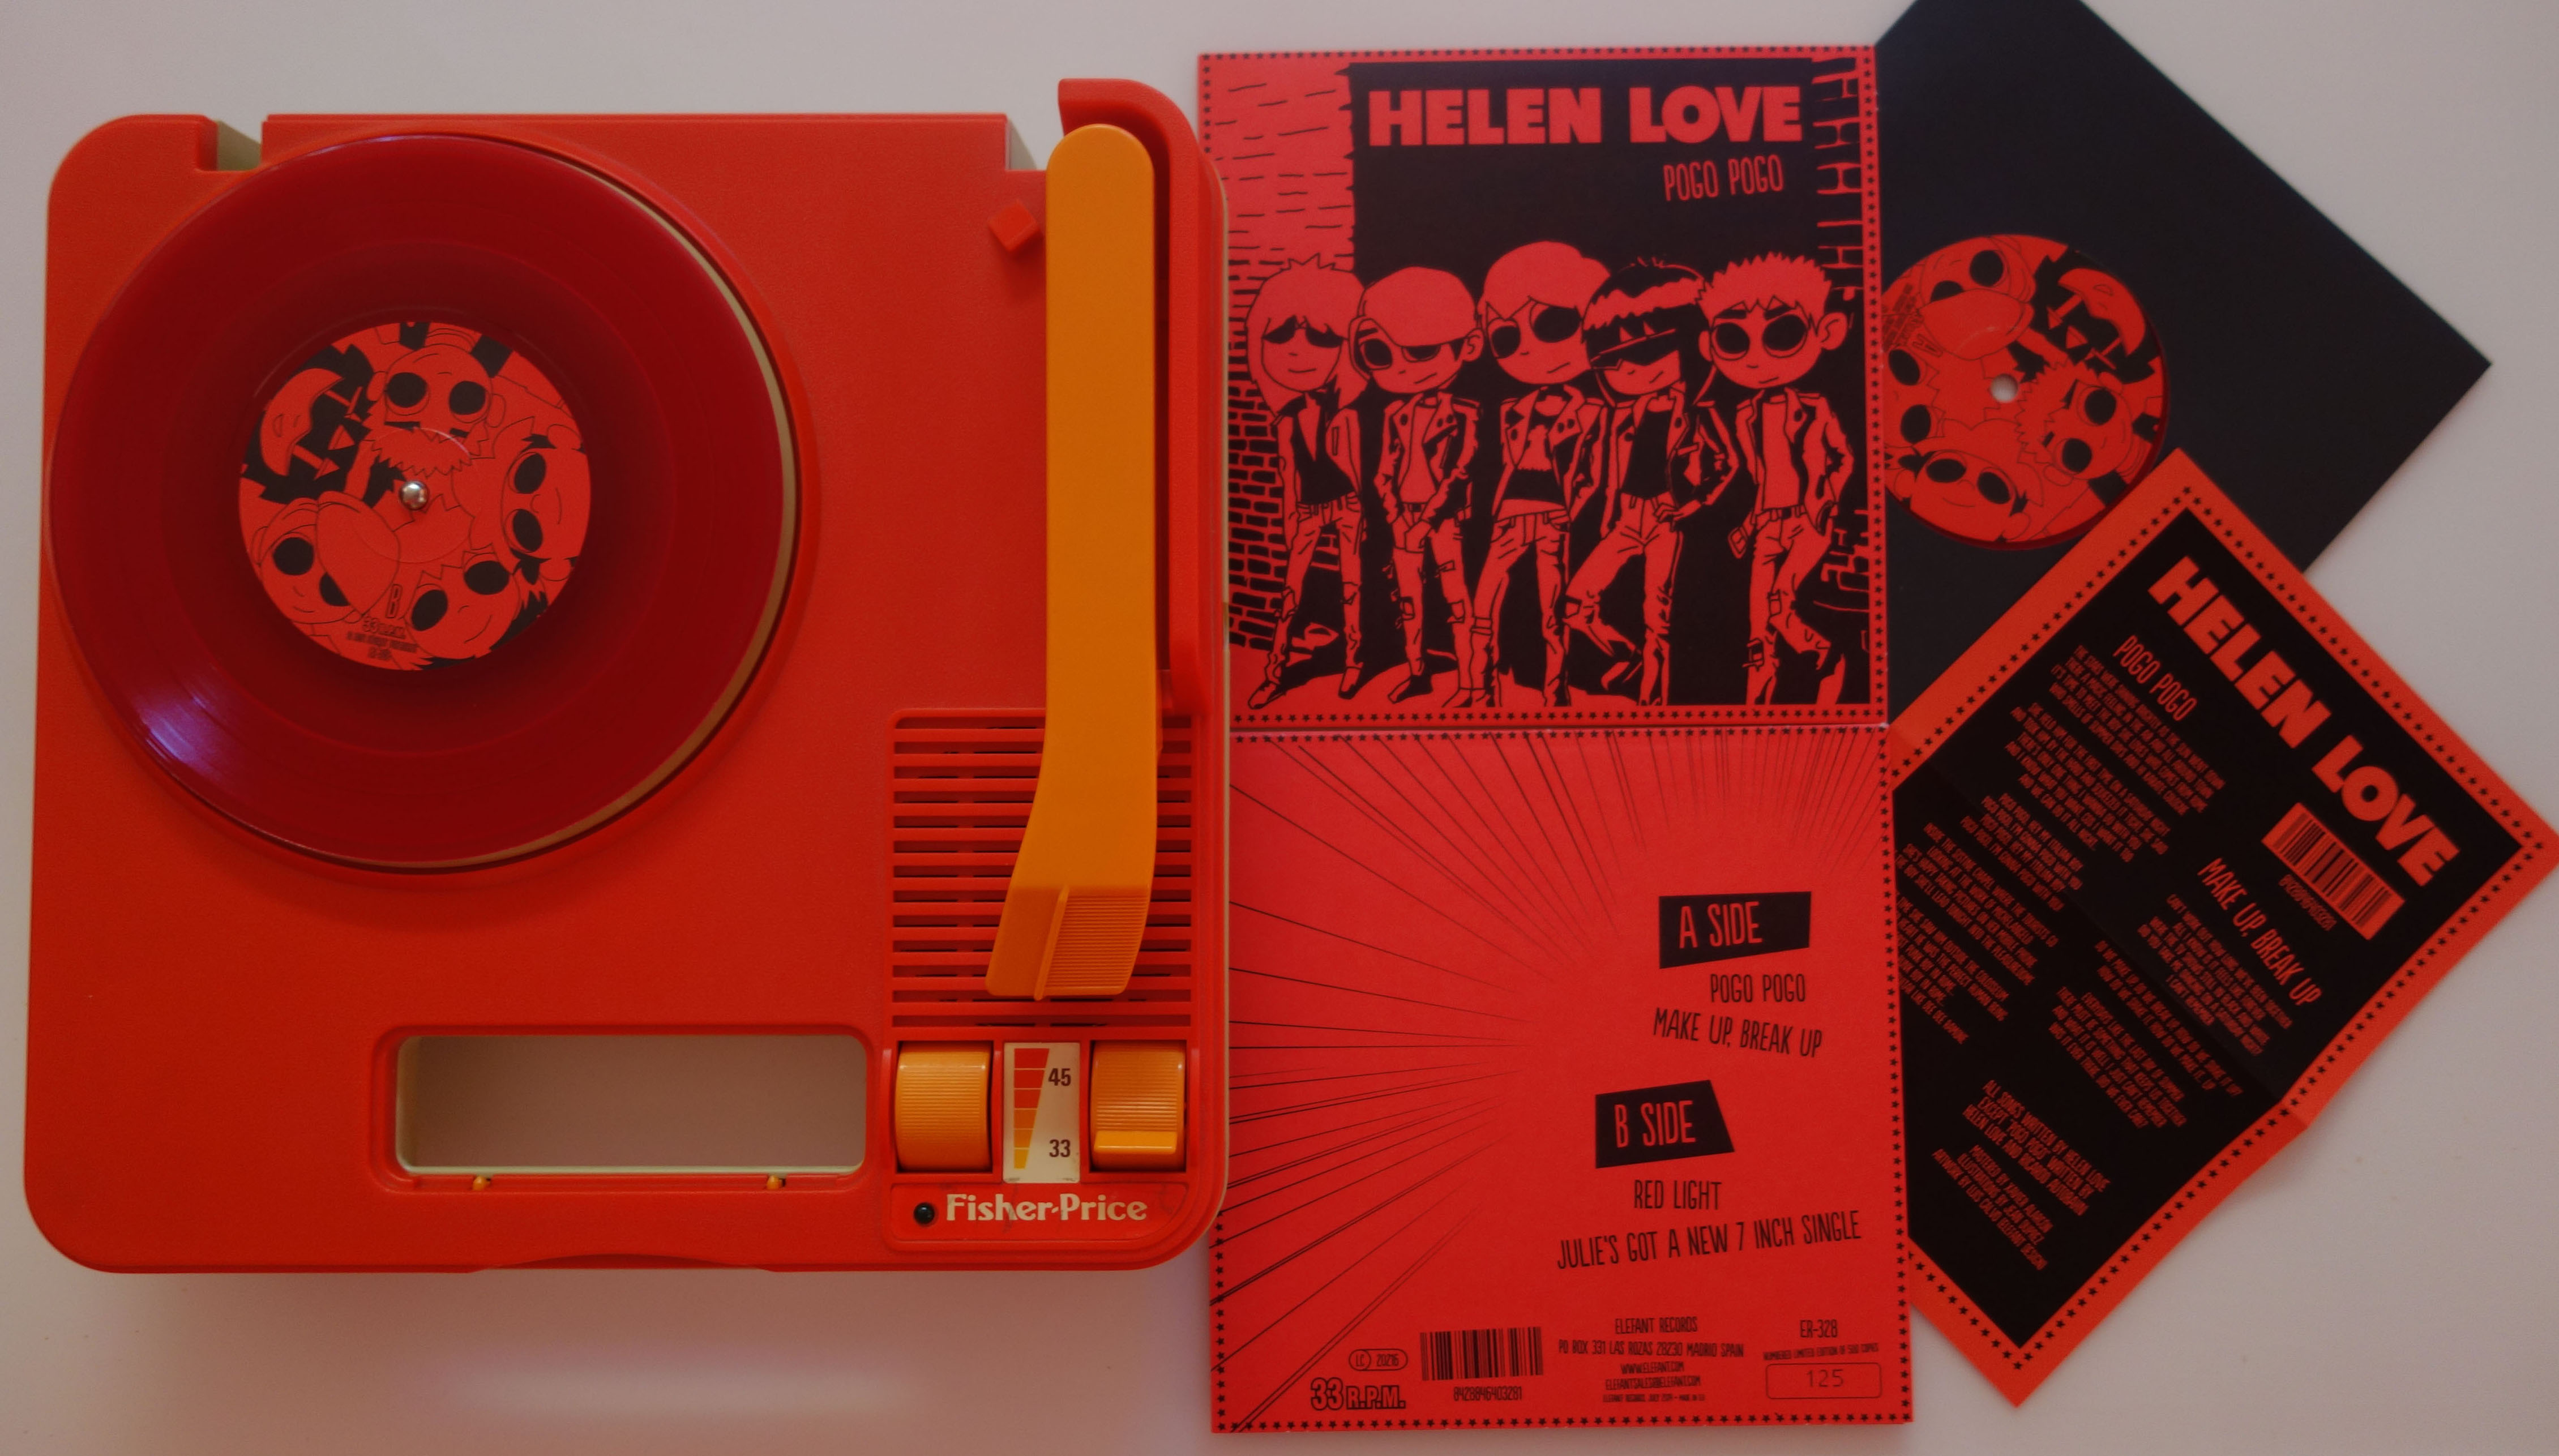 Helen Love "Pogo Pogo" Single